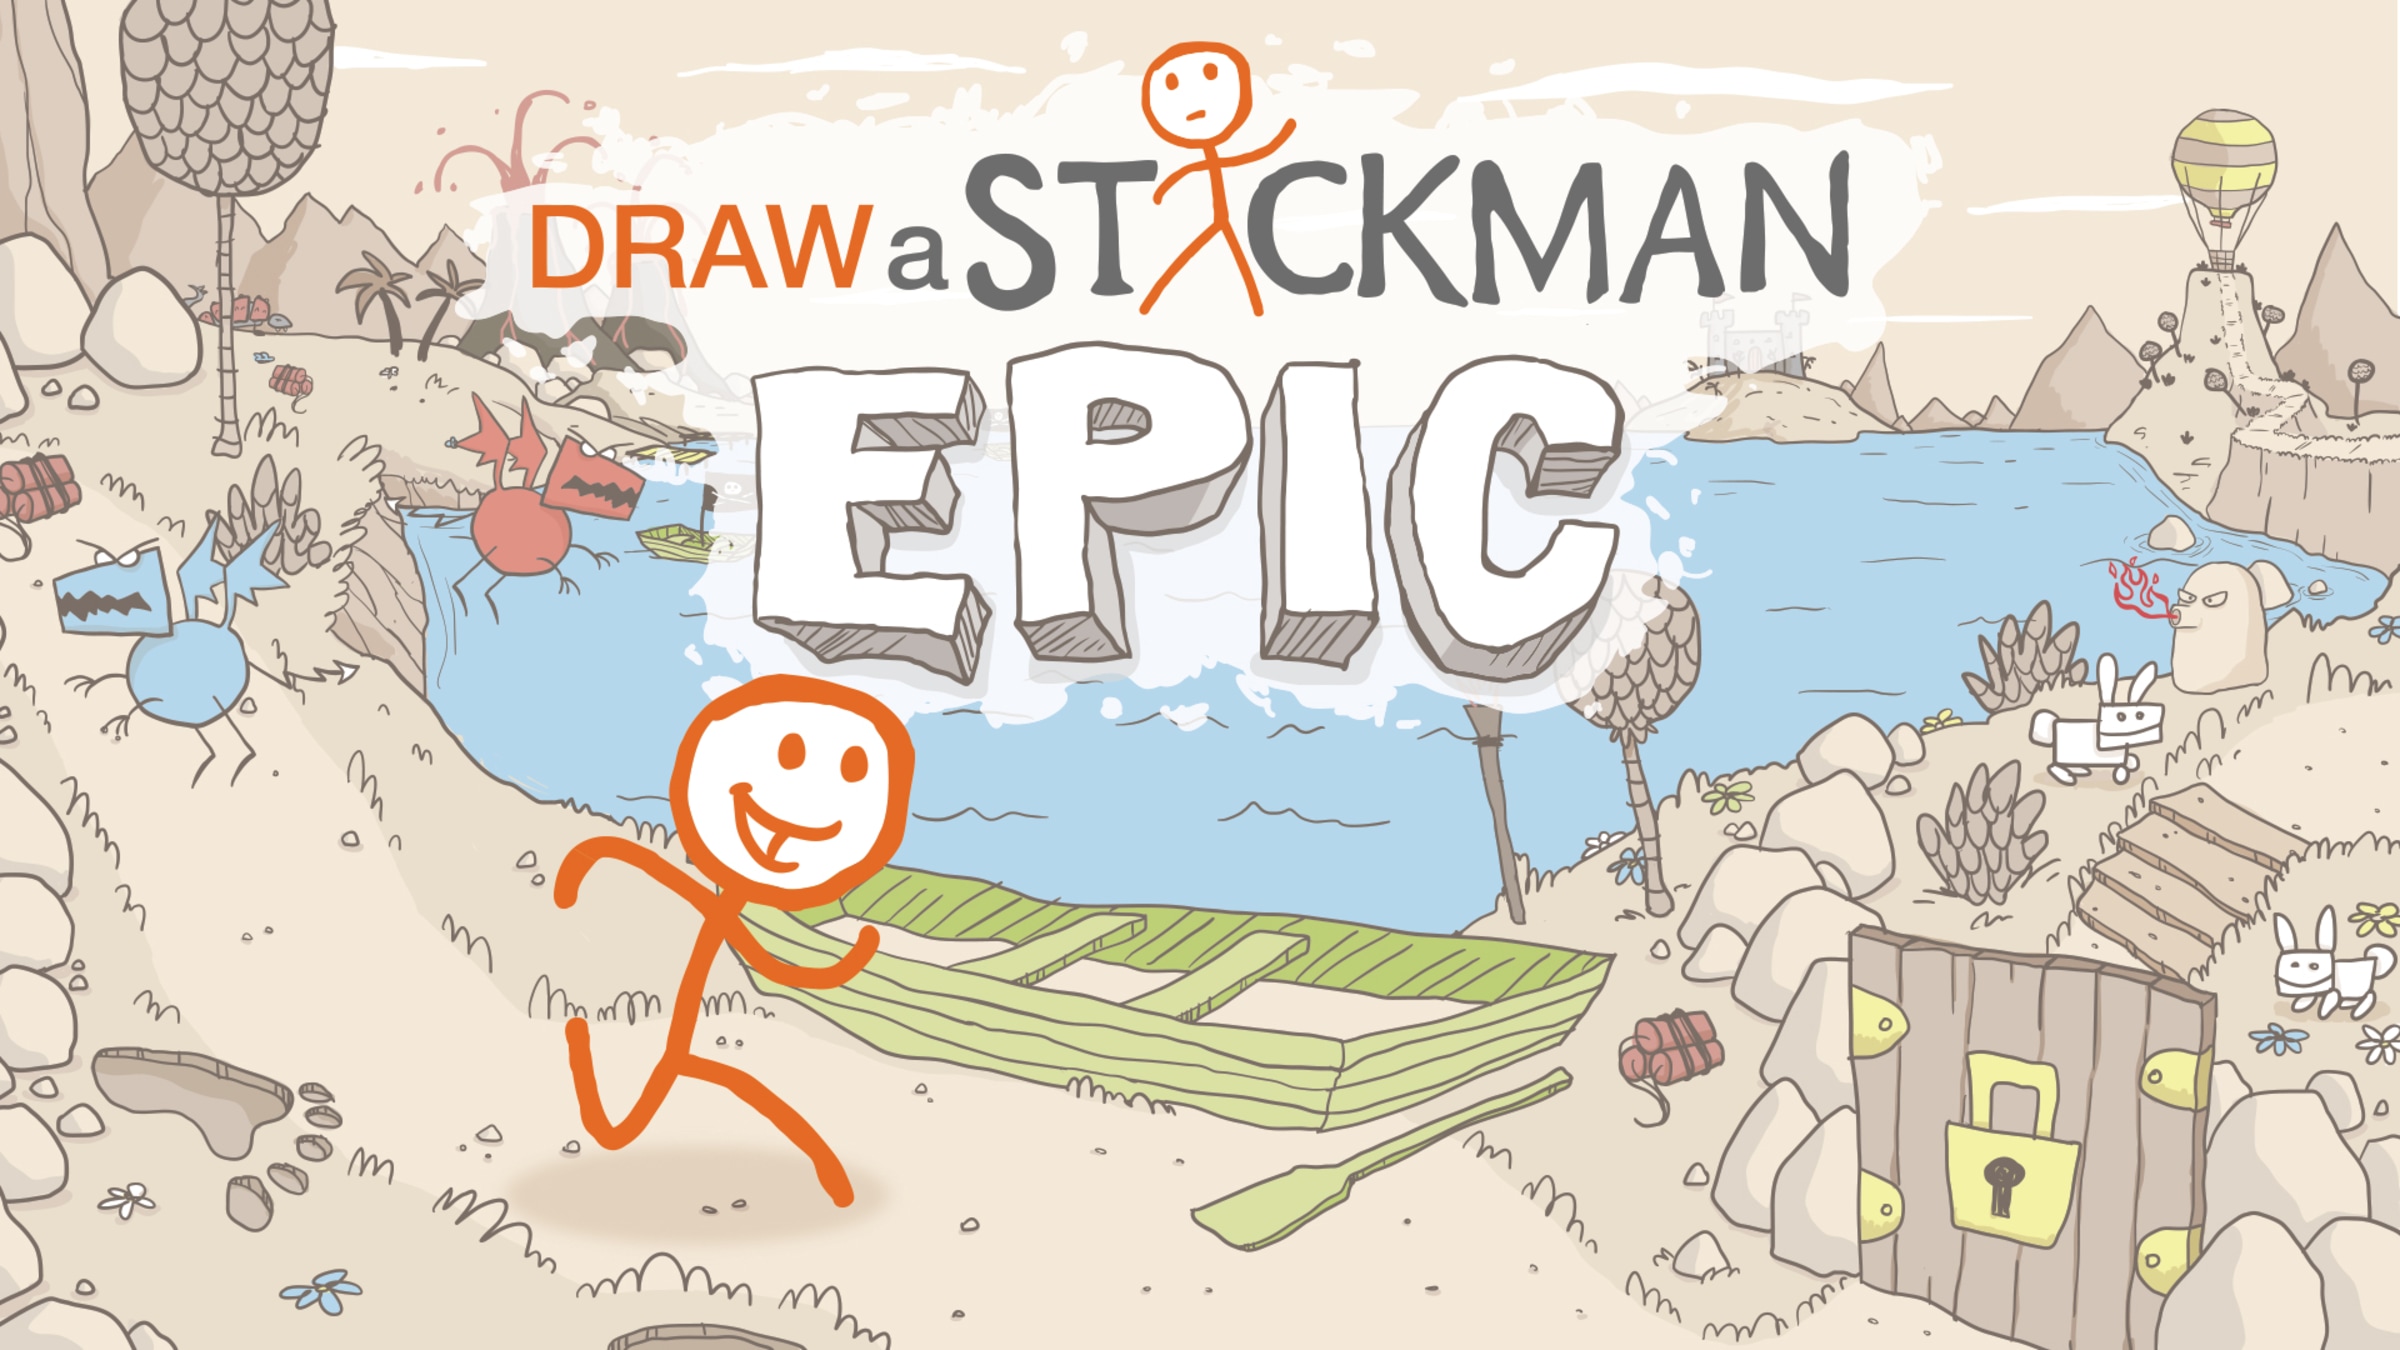 Stickman Games